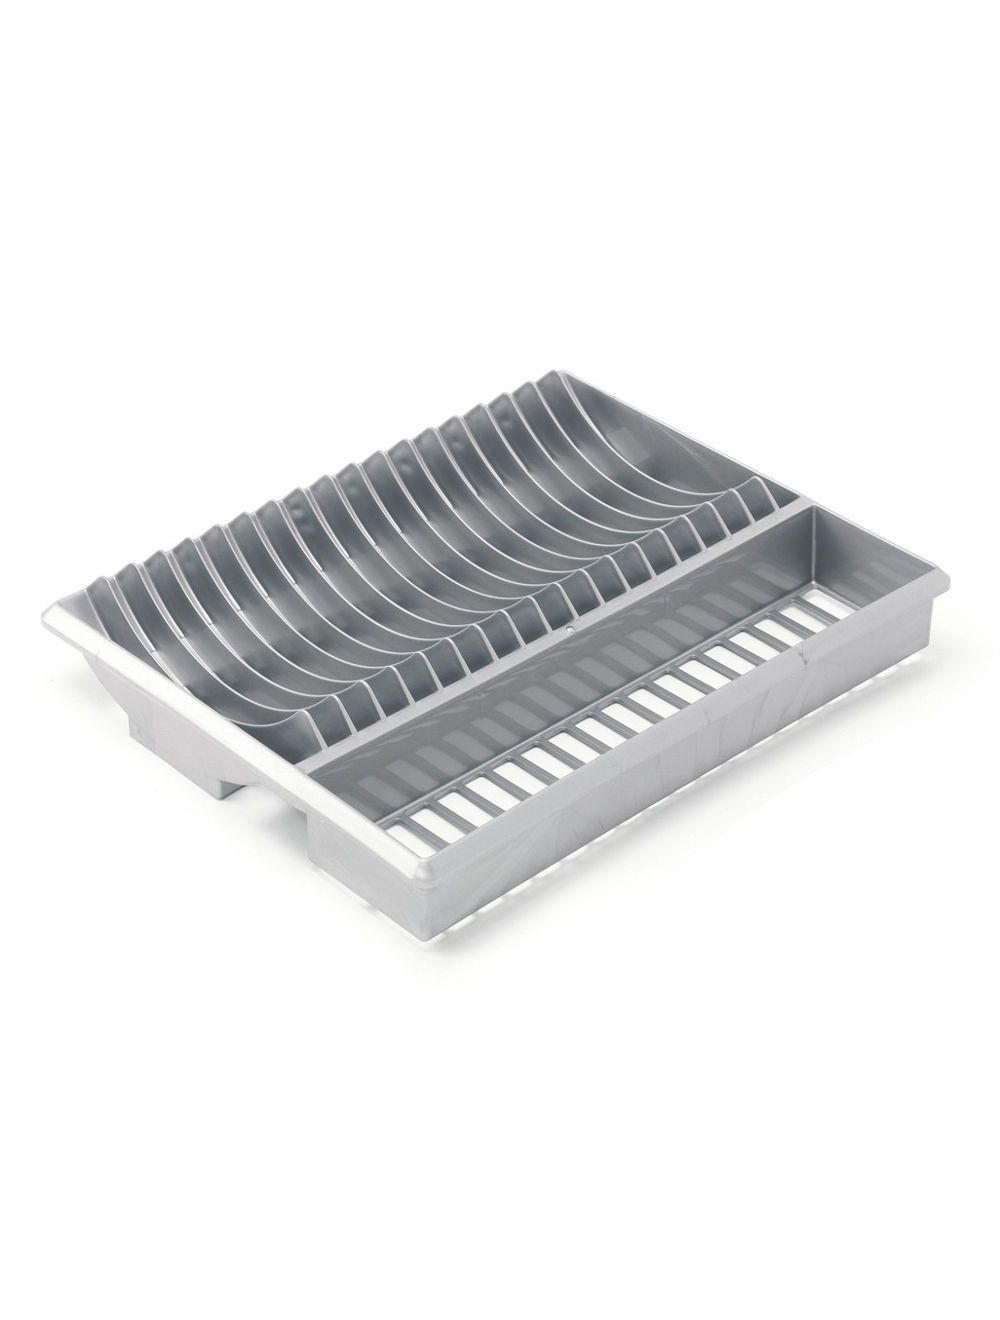 Plastic Plate Rack in Metallic Silver Colour